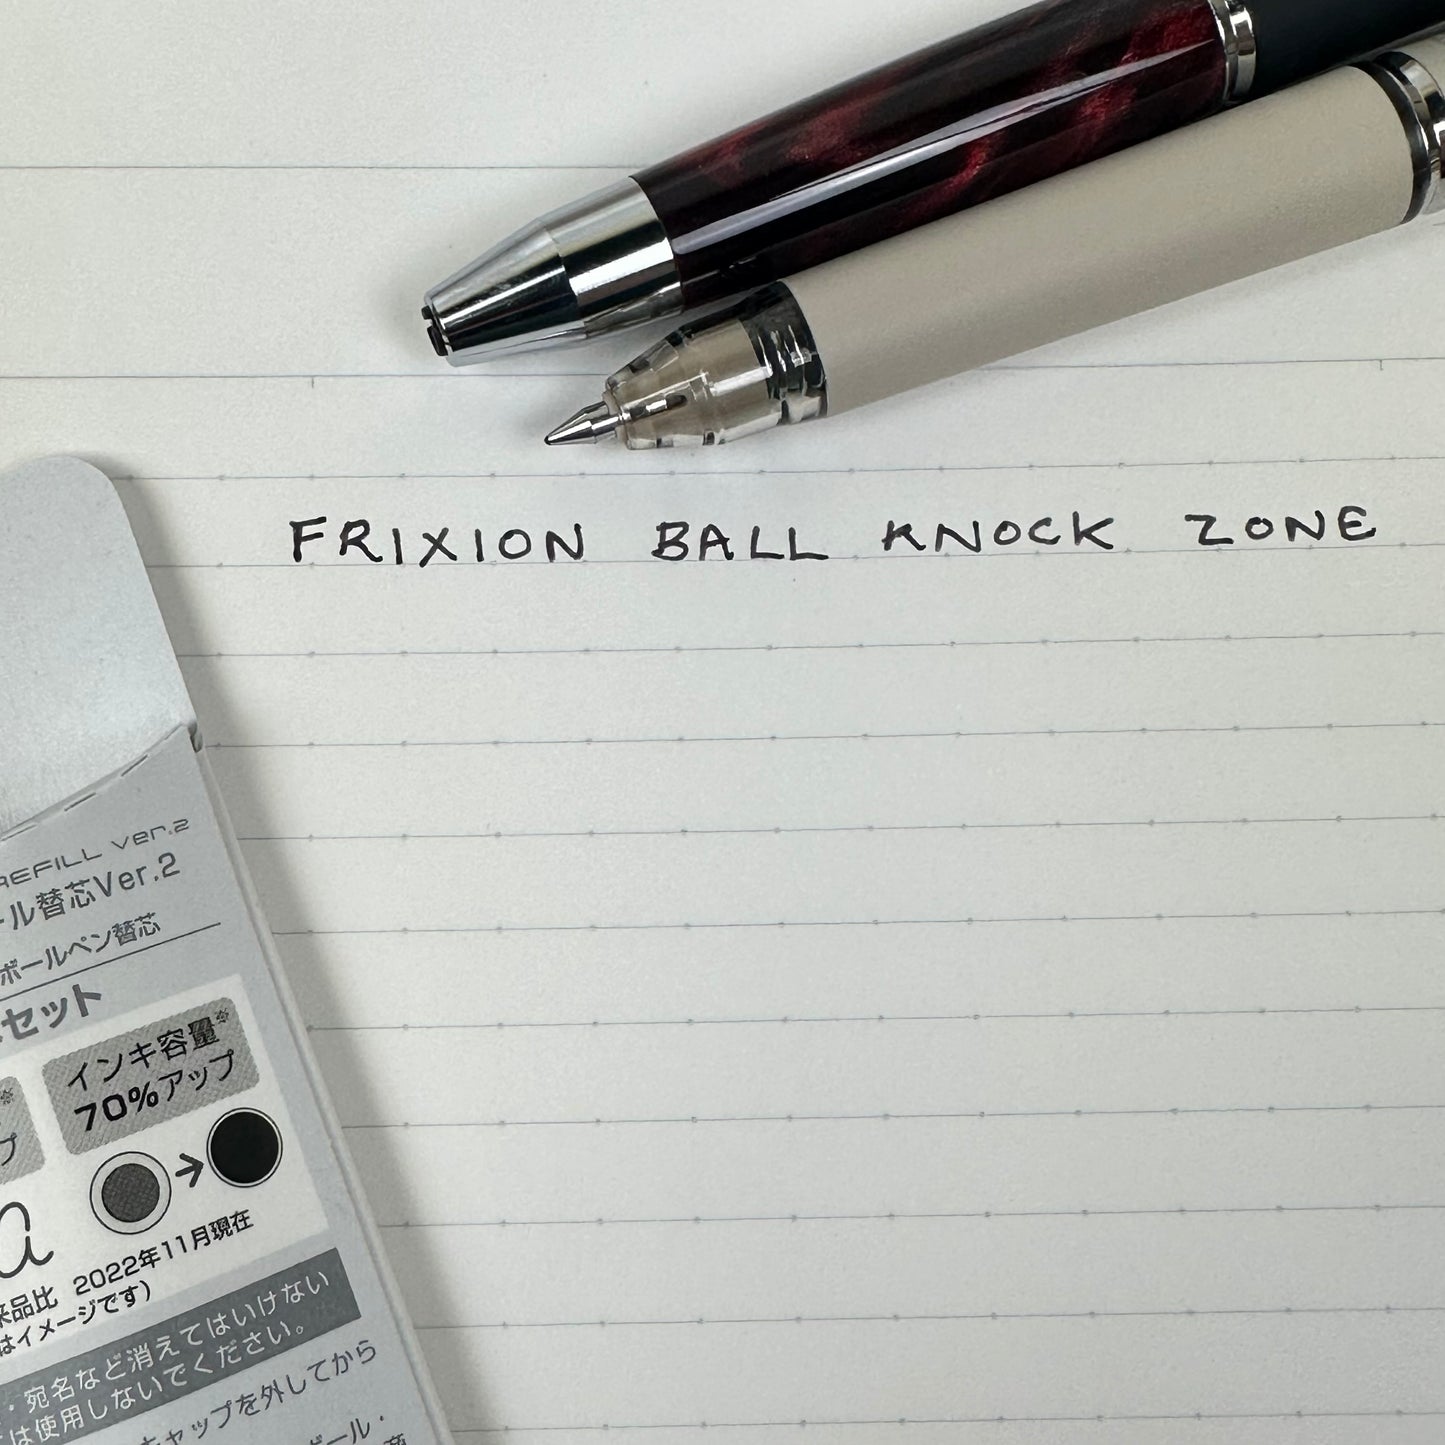 Erasable Frixion Ball Knock Zone